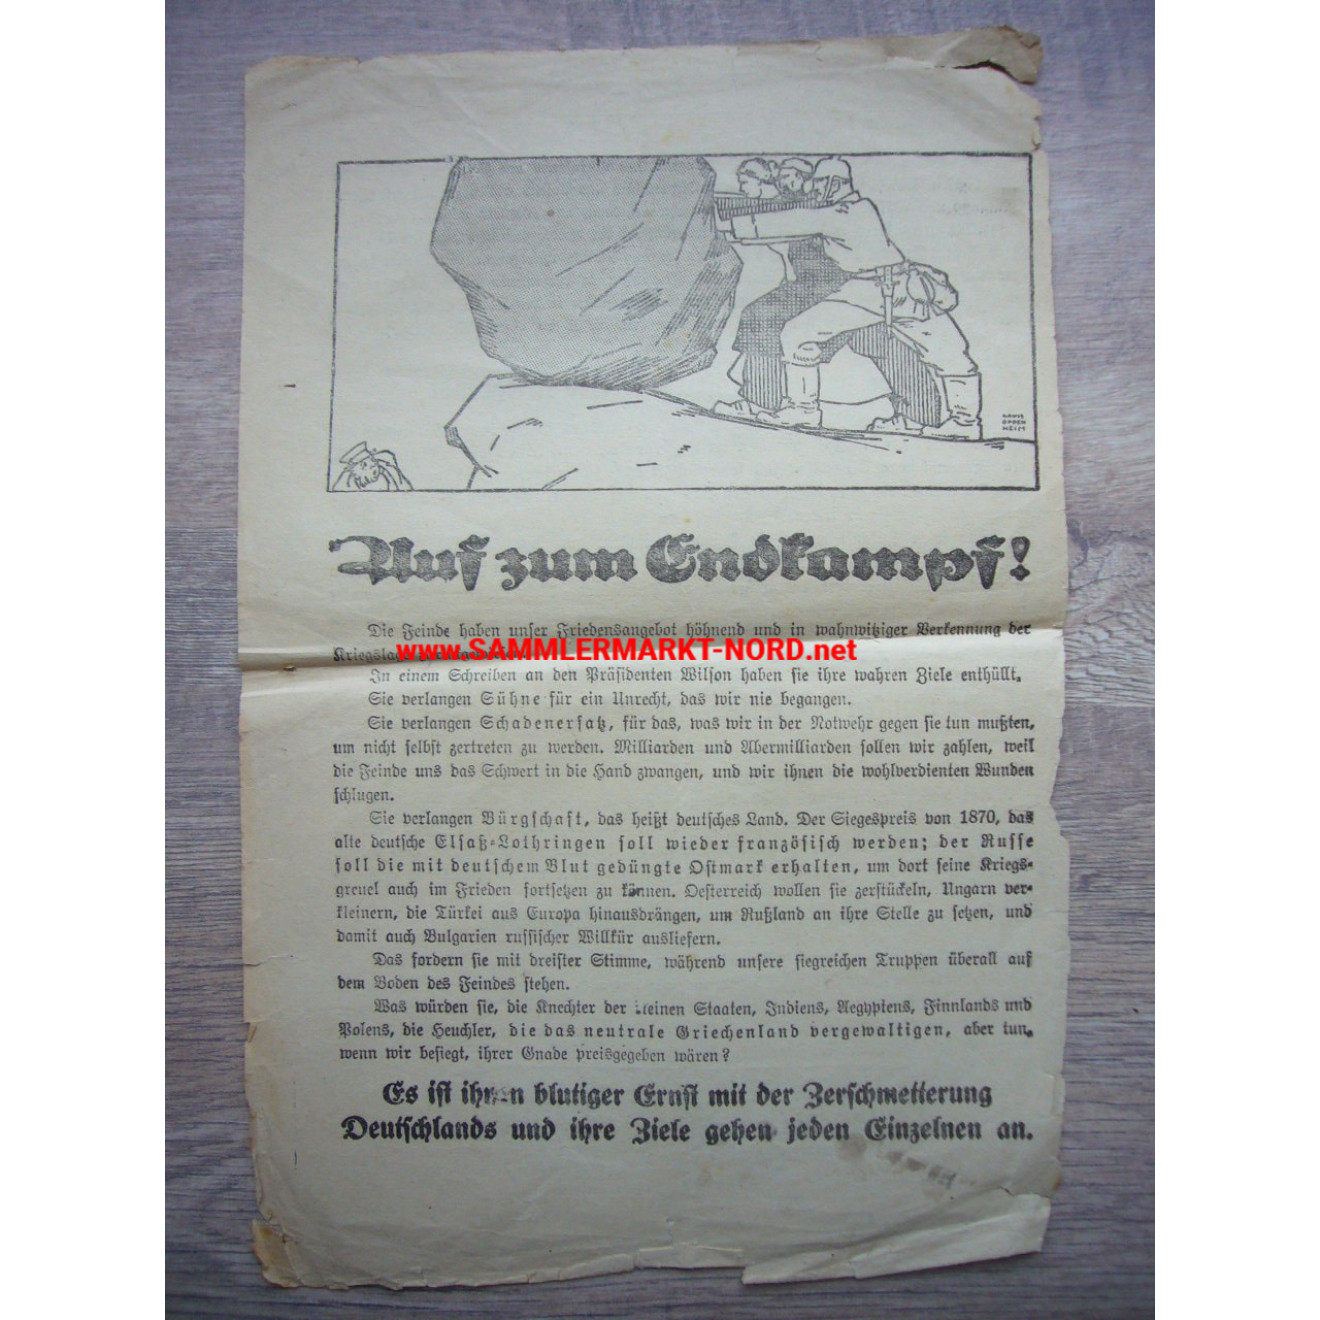 Auf zum Endkampf! - Propaganda Flugblatt um 1916